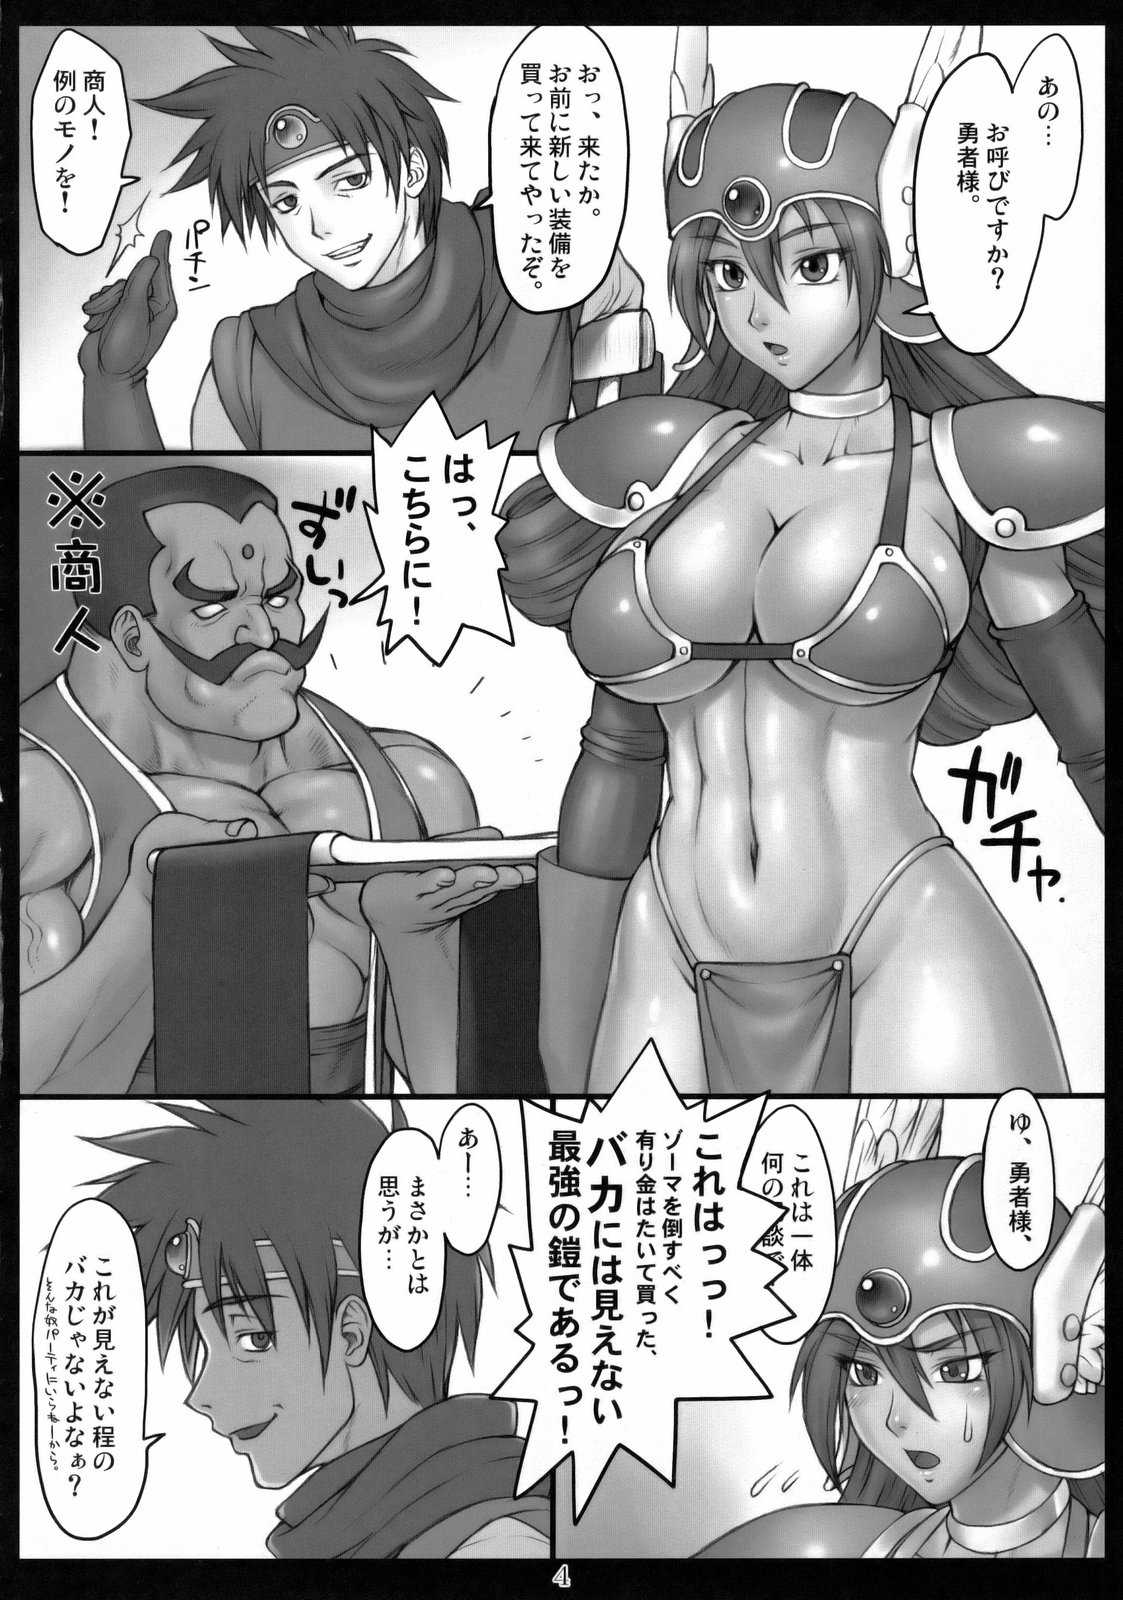 (SC42)[Nagaredamaya] Dragon Quest of Nakedness. GREEN (Dragon Quest) (サンクリ42)[流弾屋] Dragon Quest of Nakedness. GREEN (ドラゴンクエスト)